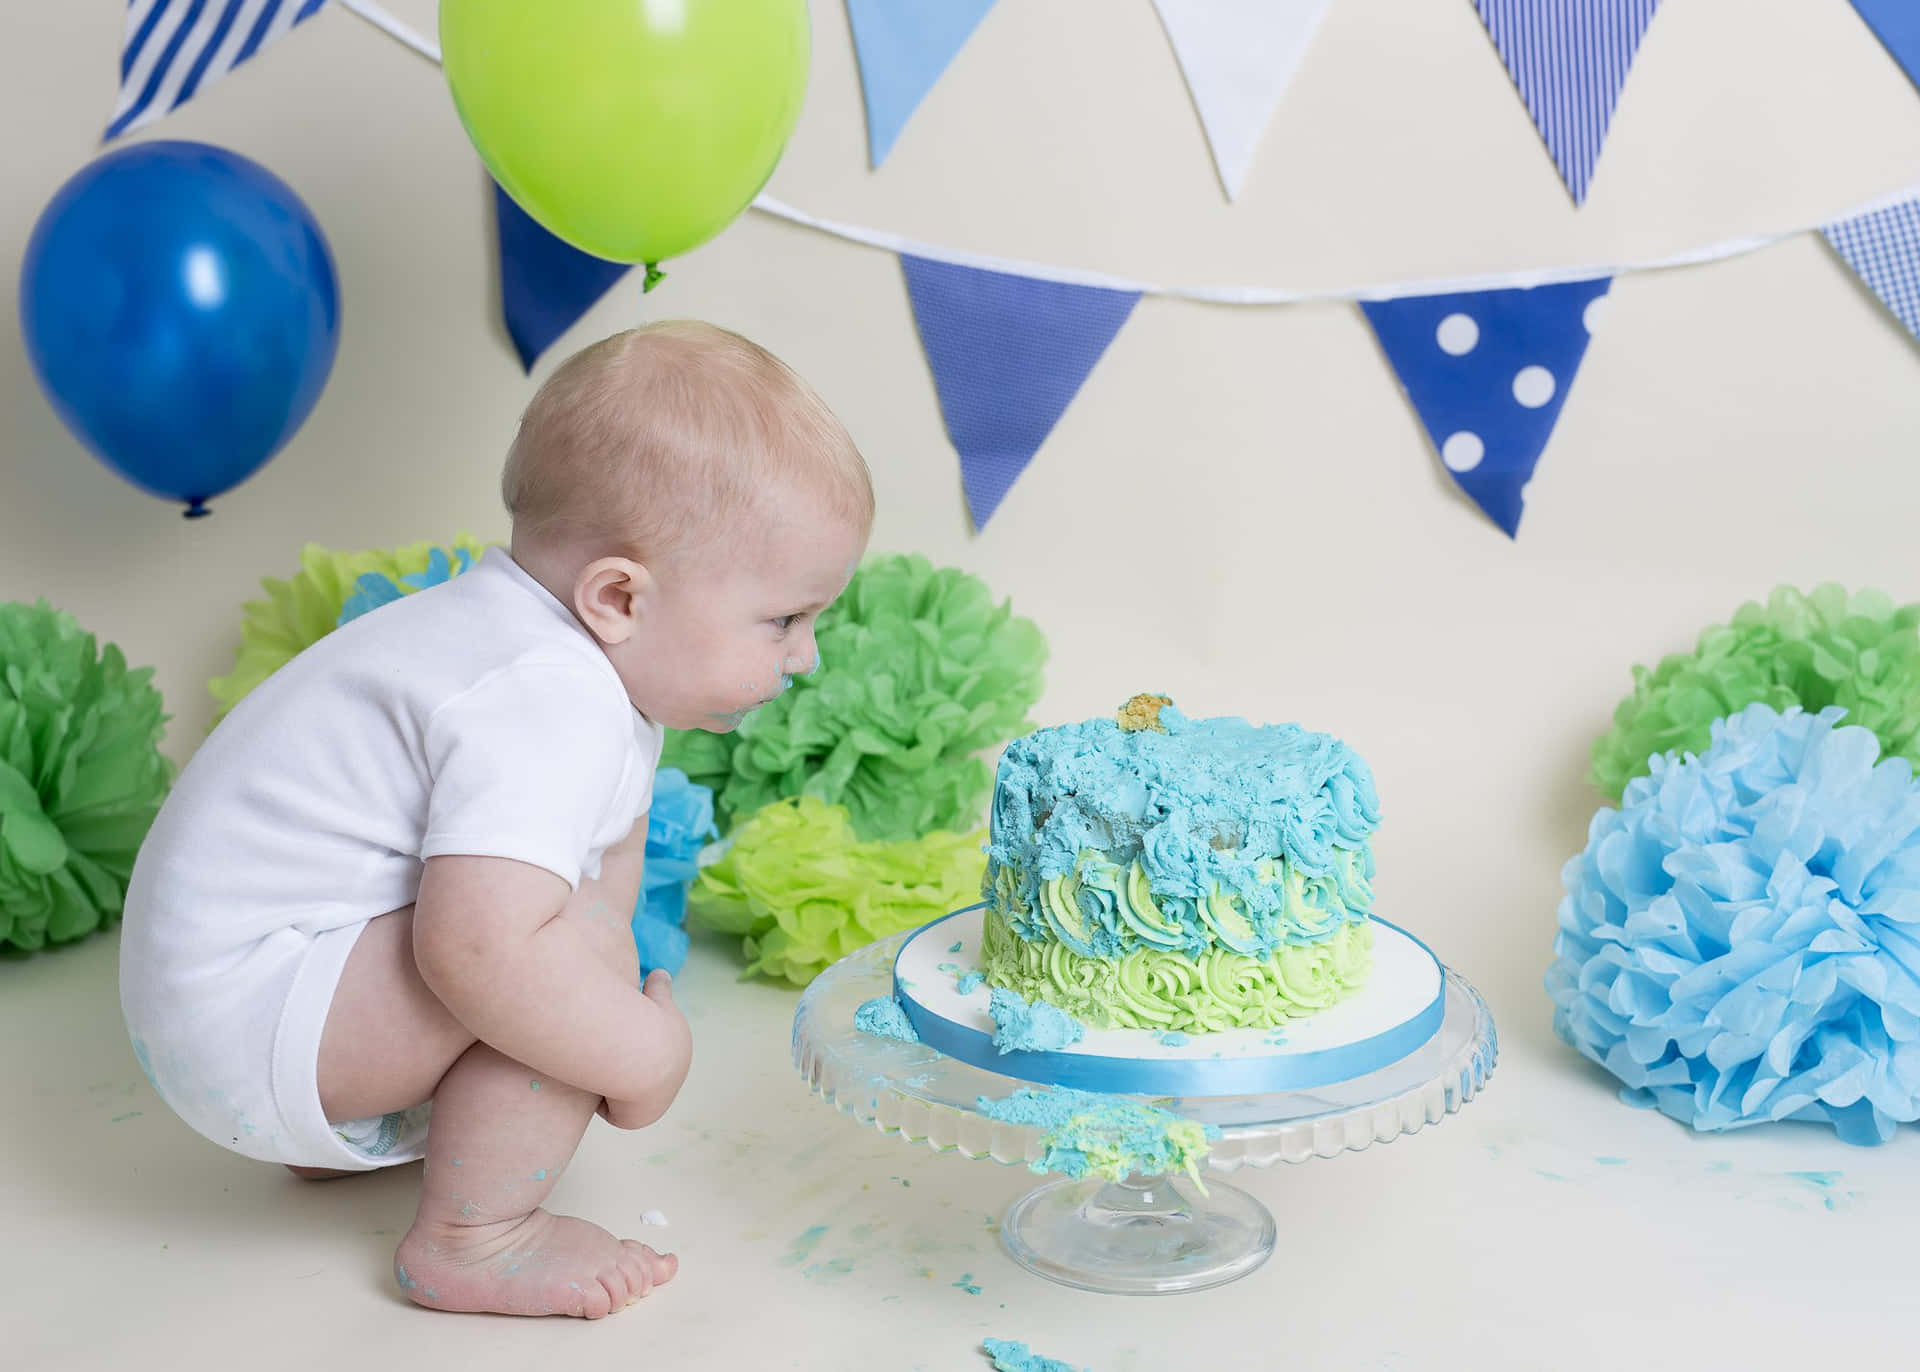 Celebrate with a smash cake!